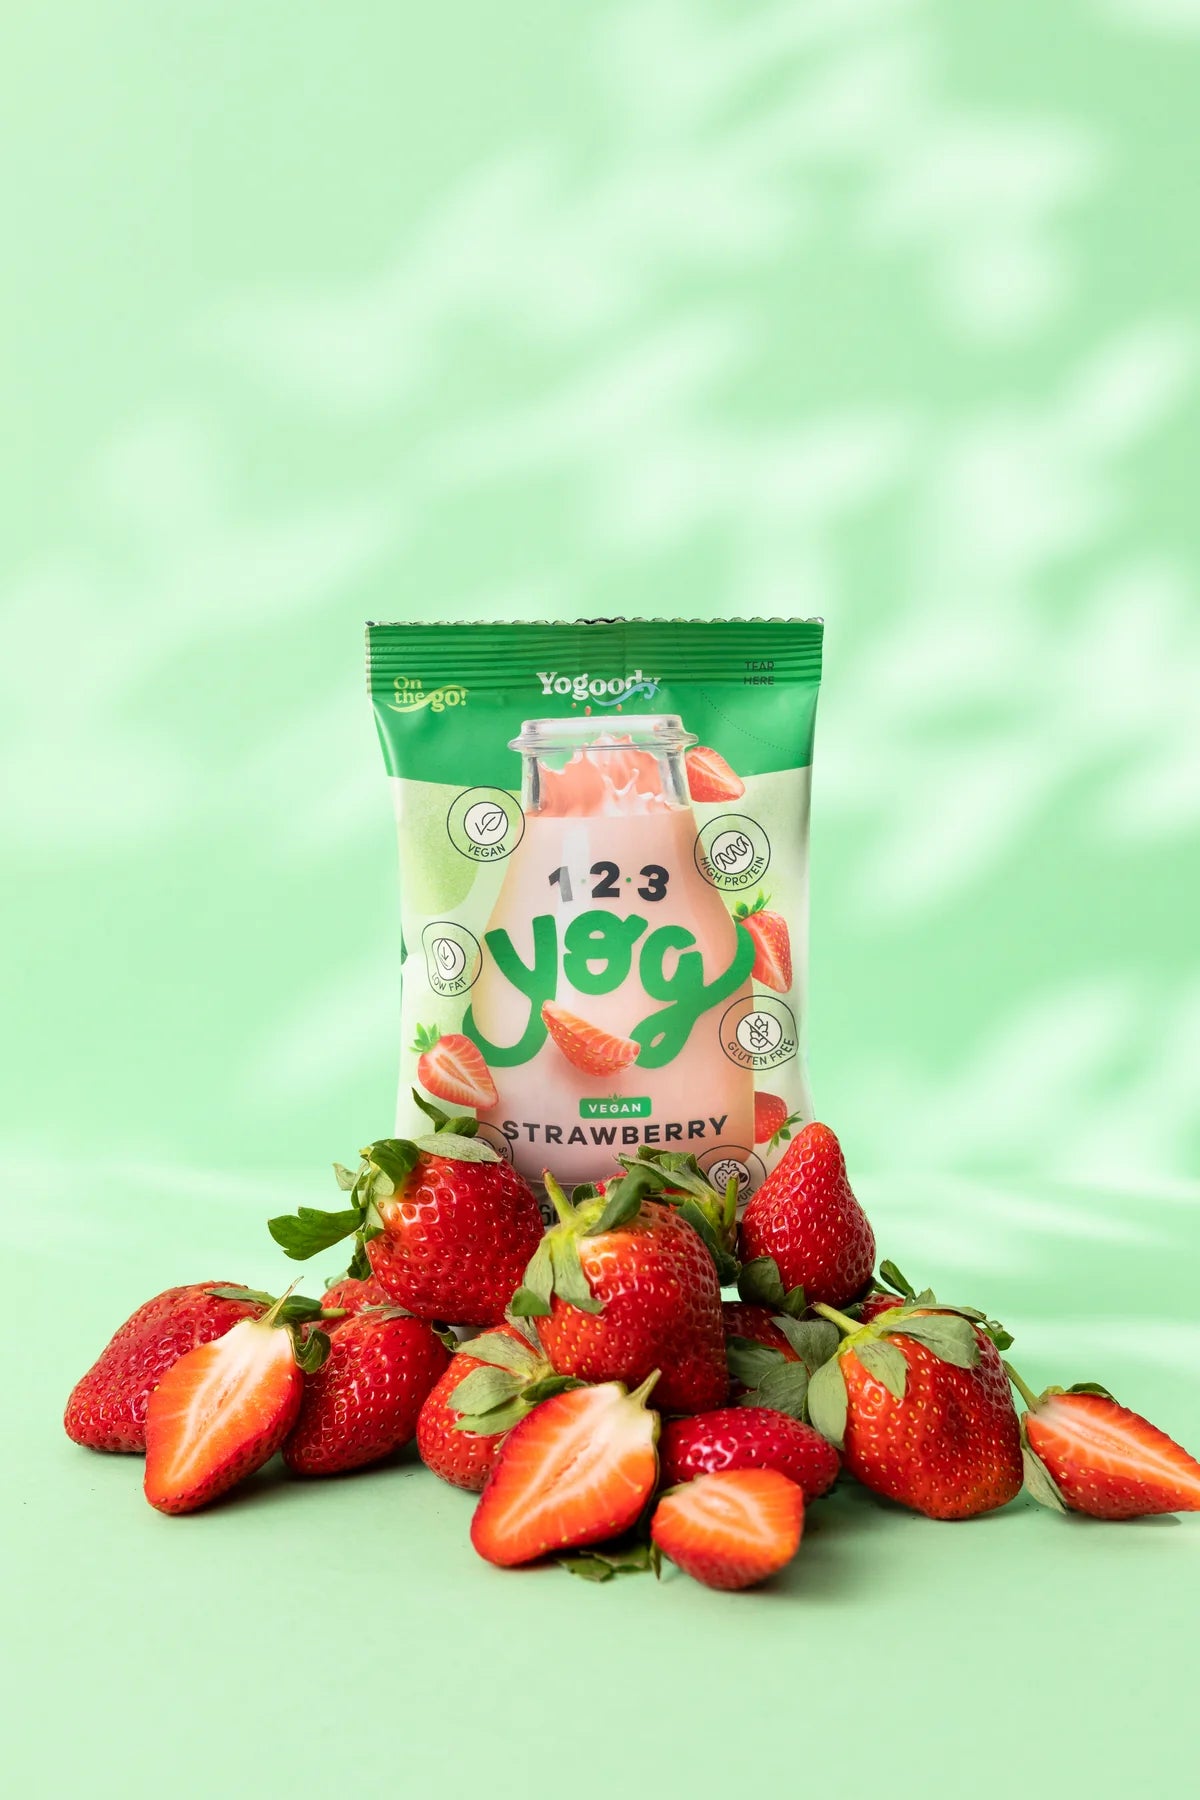 1.2.3. YOG Vegan Strawberry Flavoured Shake - 7 x 30g sachets